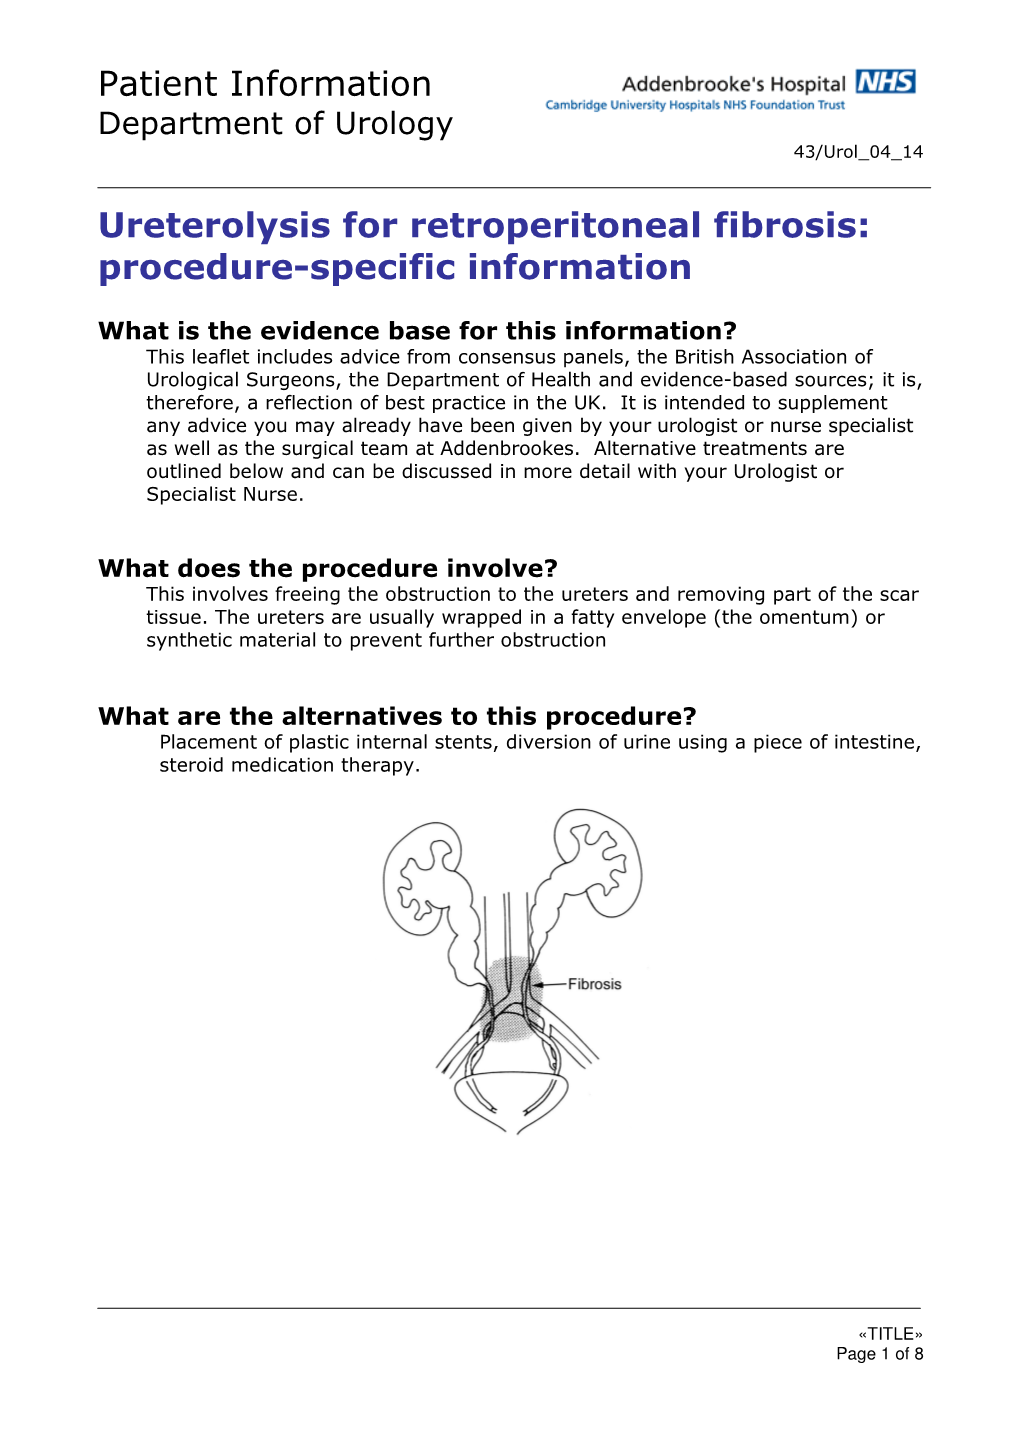 Patient Information Ureterolysis for Retroperitoneal Fibrosis: Procedure